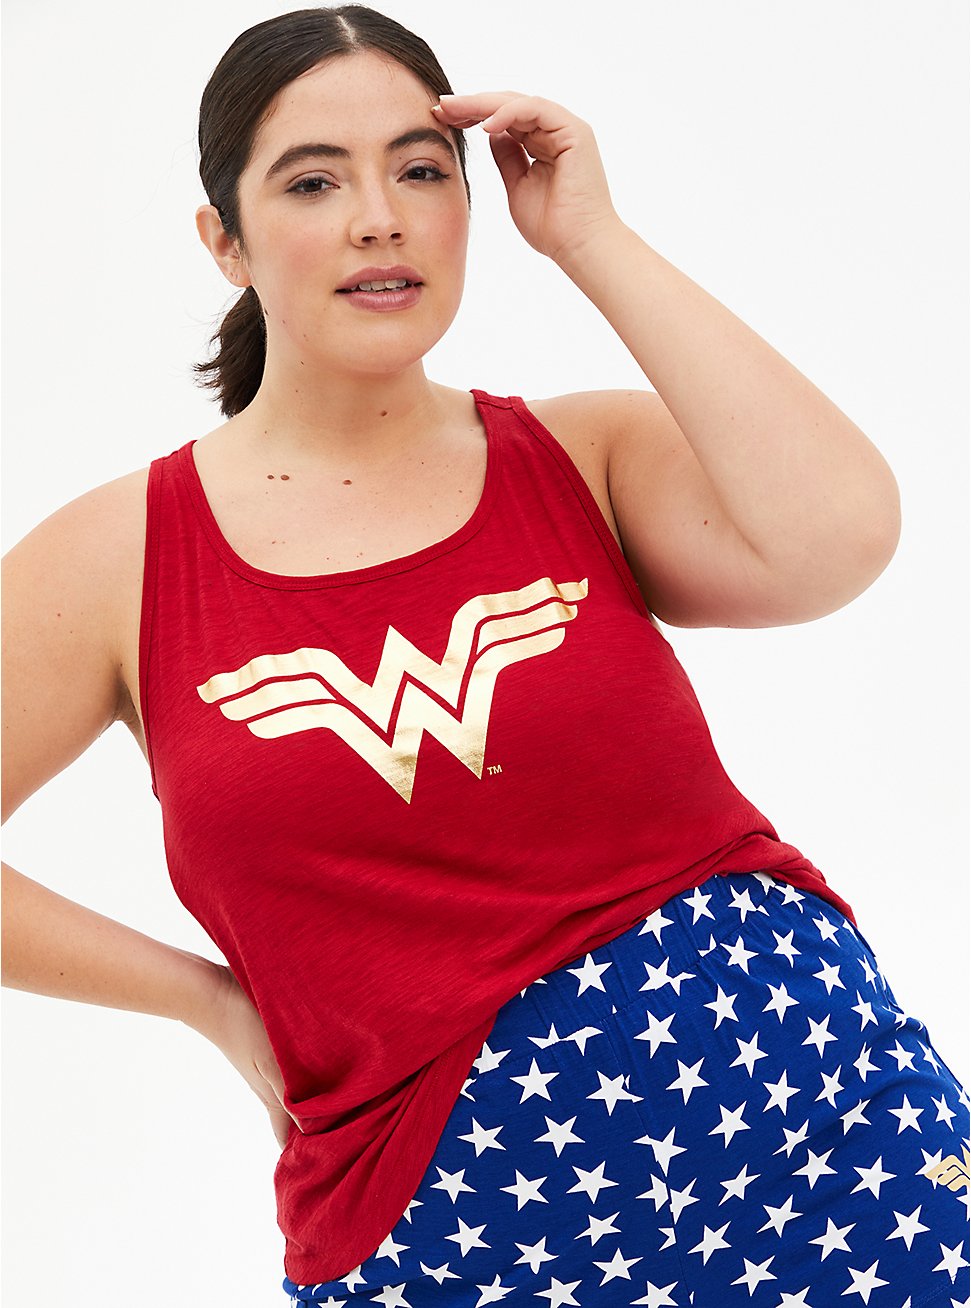 Wonder Woman Multi Jersey Sleep Tank, JESTER RED, hi-res